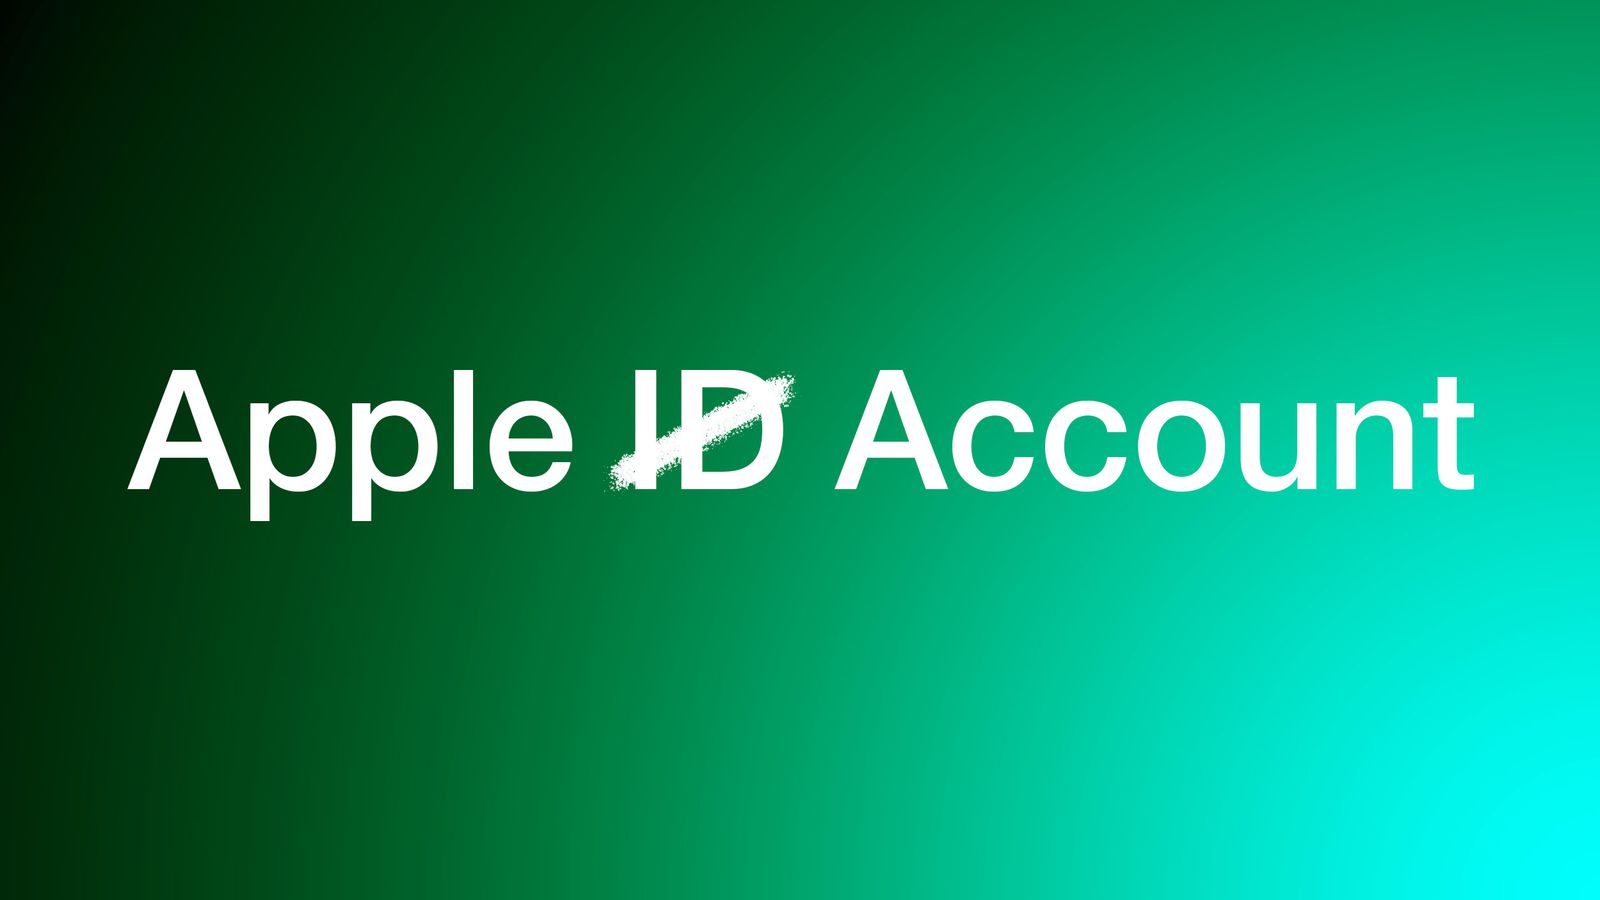 Apple ID ou Apple Account? Mudança pode estar próxima